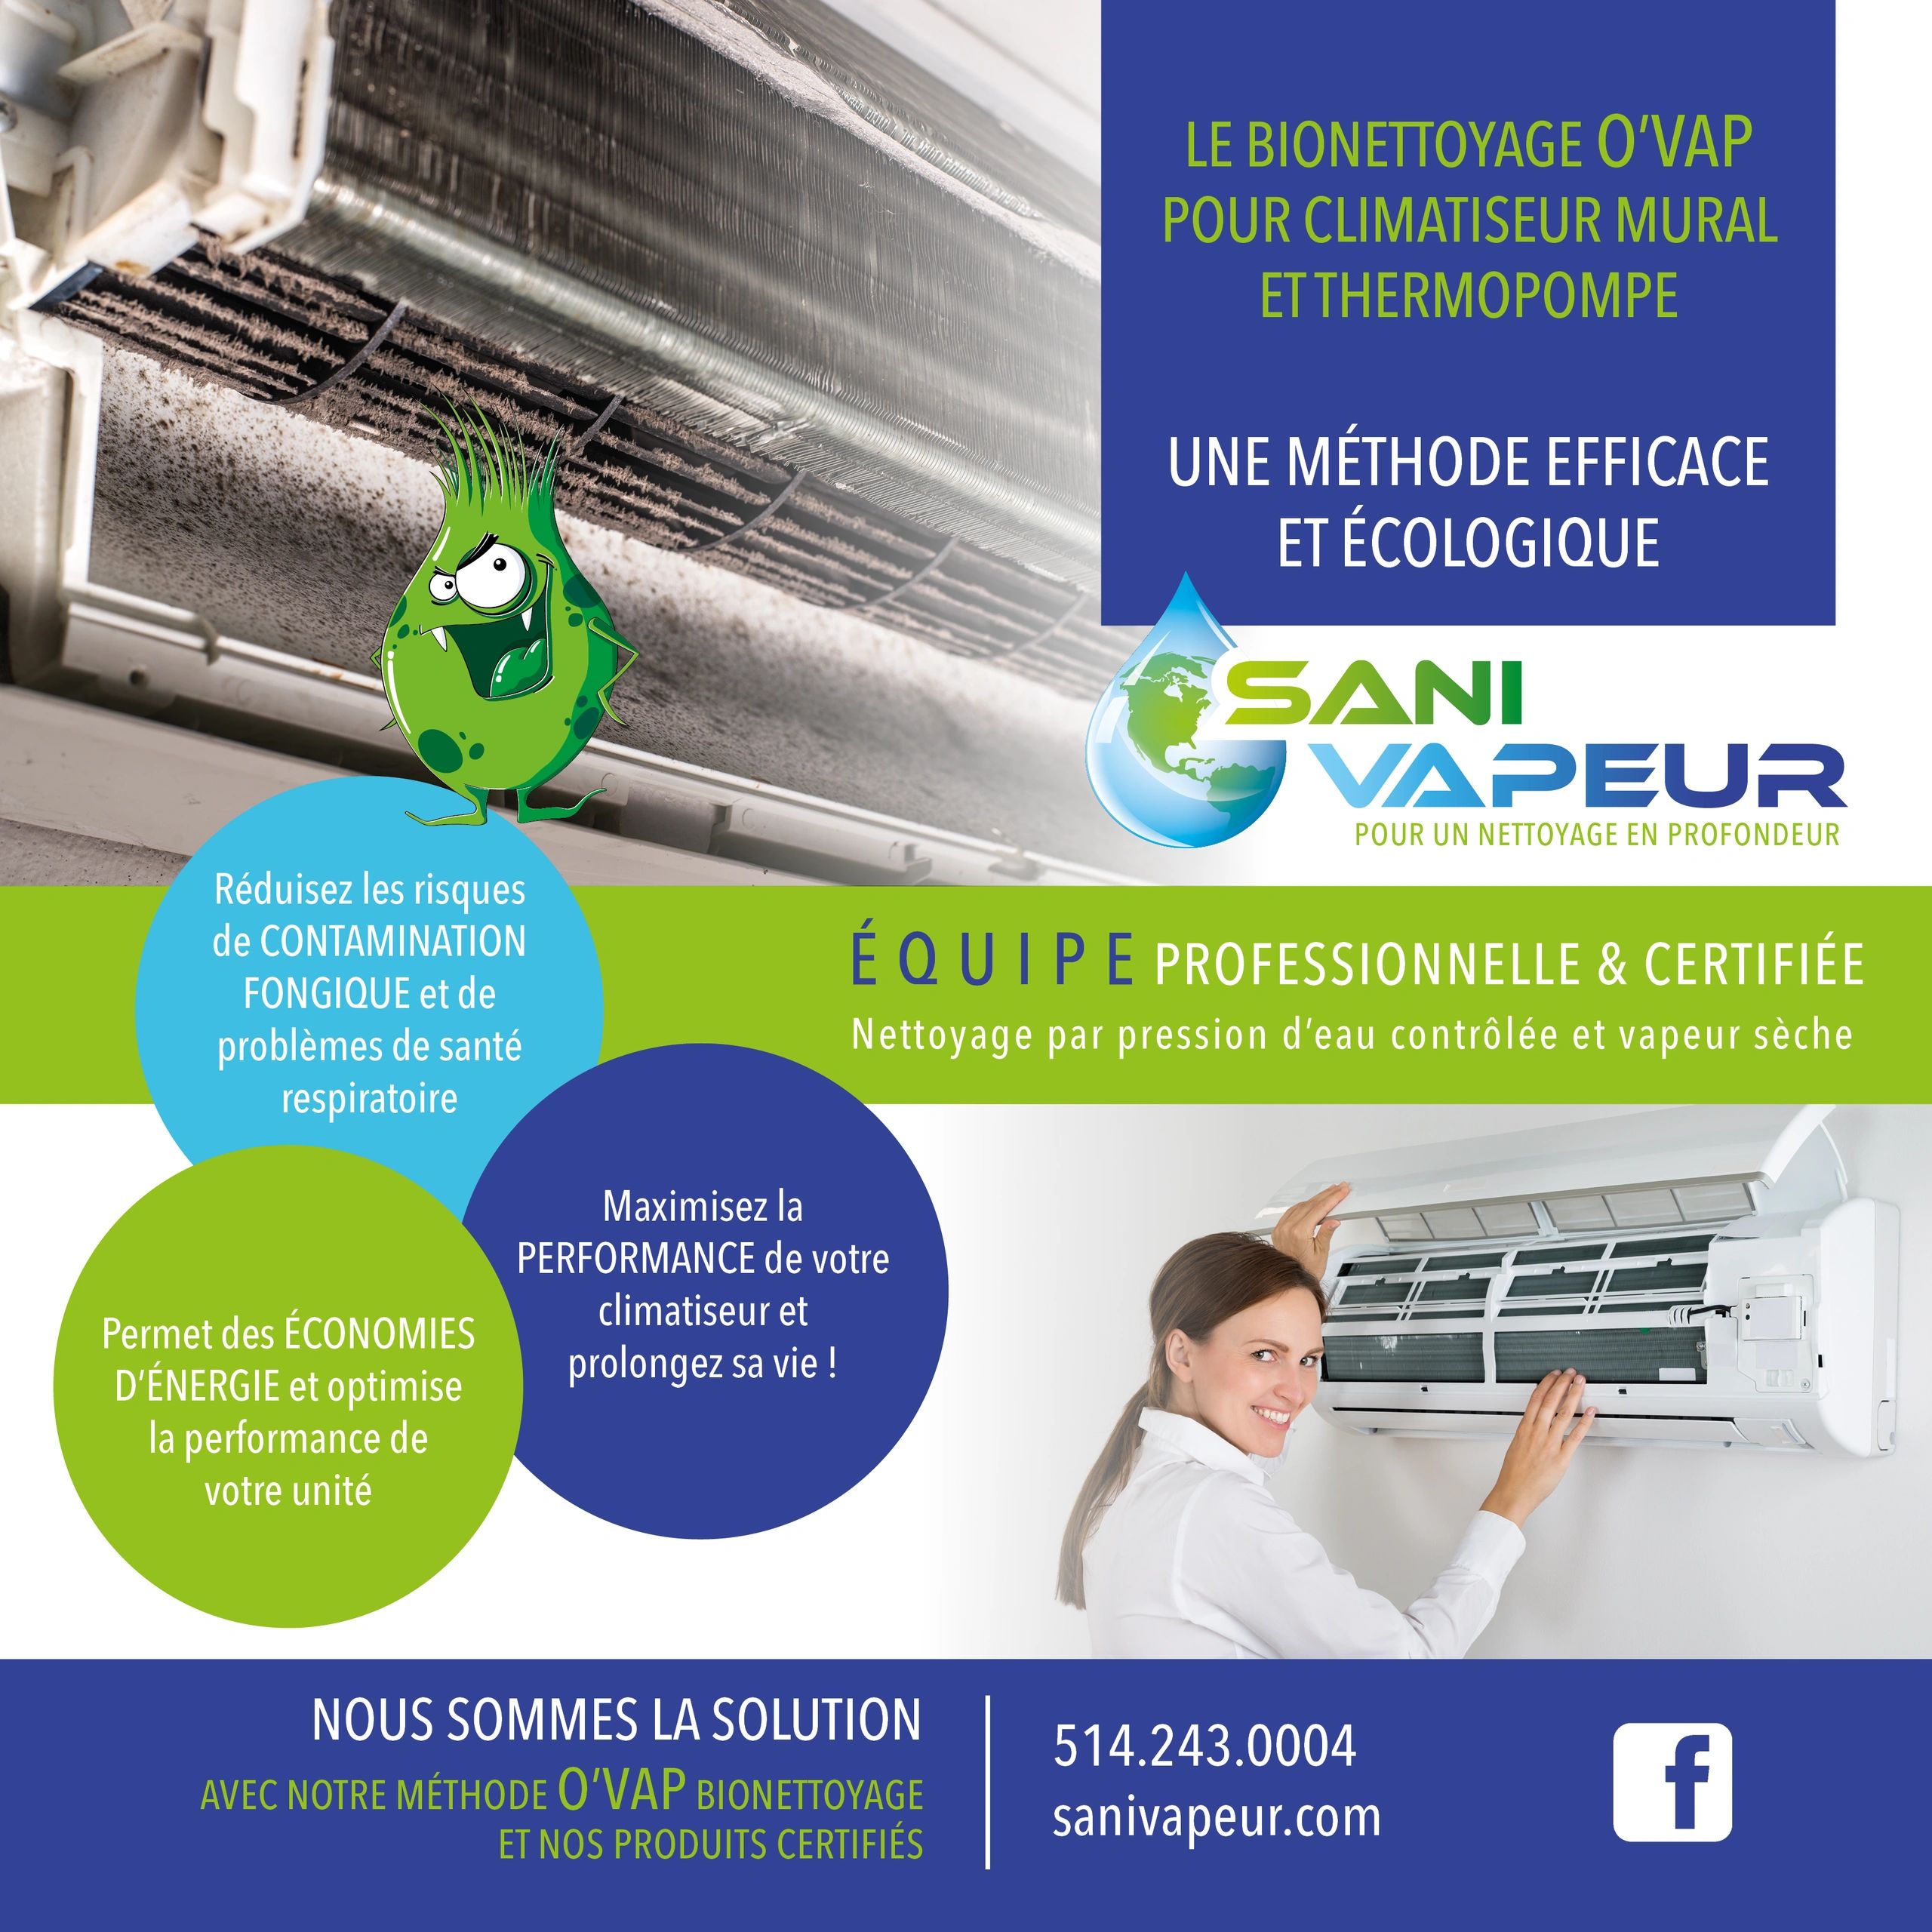 Climatisation, Nettoyage - Groupe Sani Vapeur inc